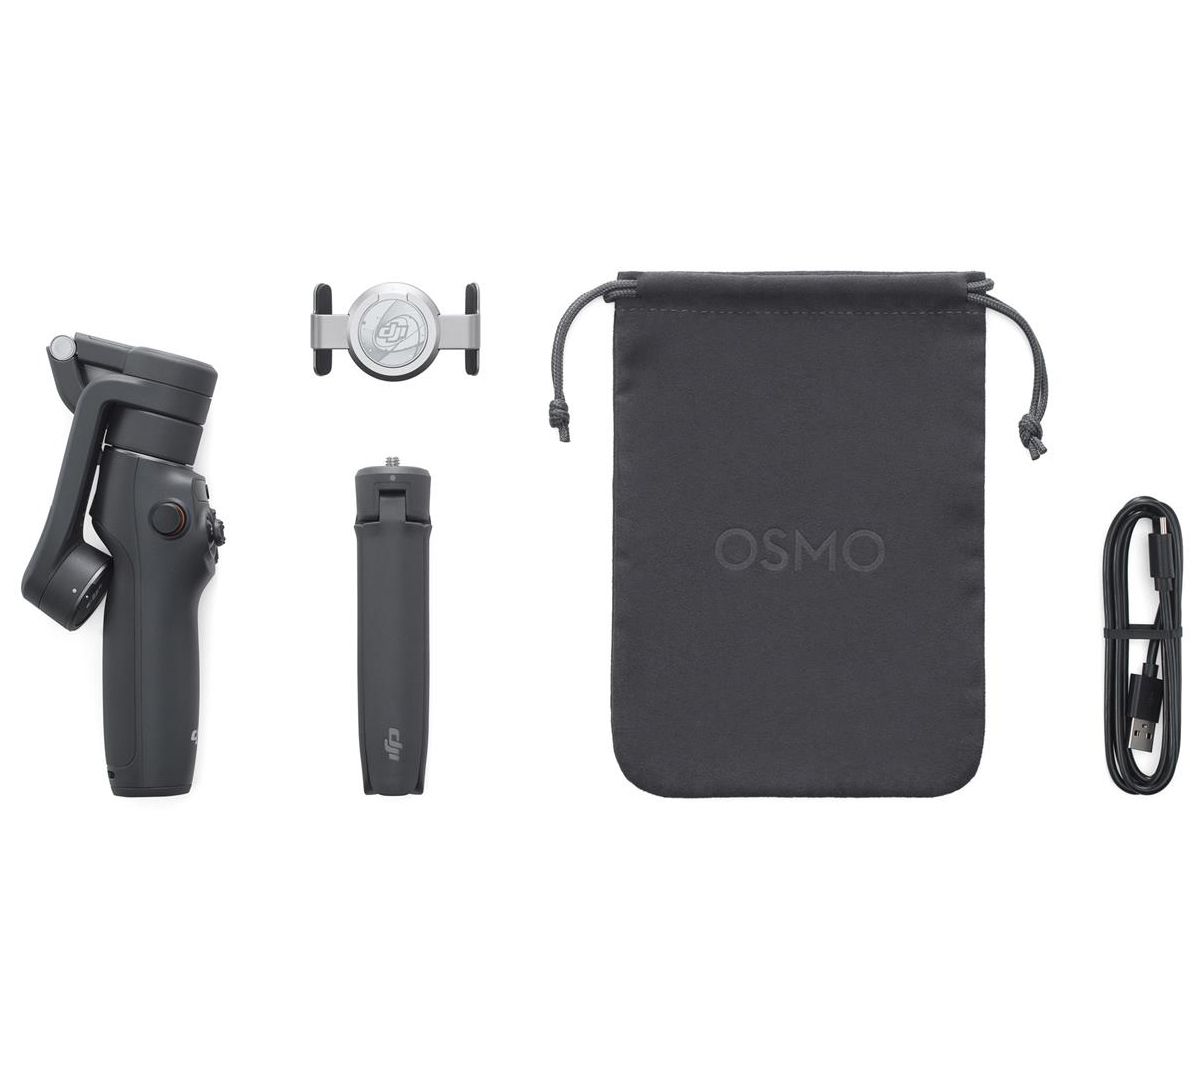 Osmo Mobile 6 - Unfold Your Creativity - DJI